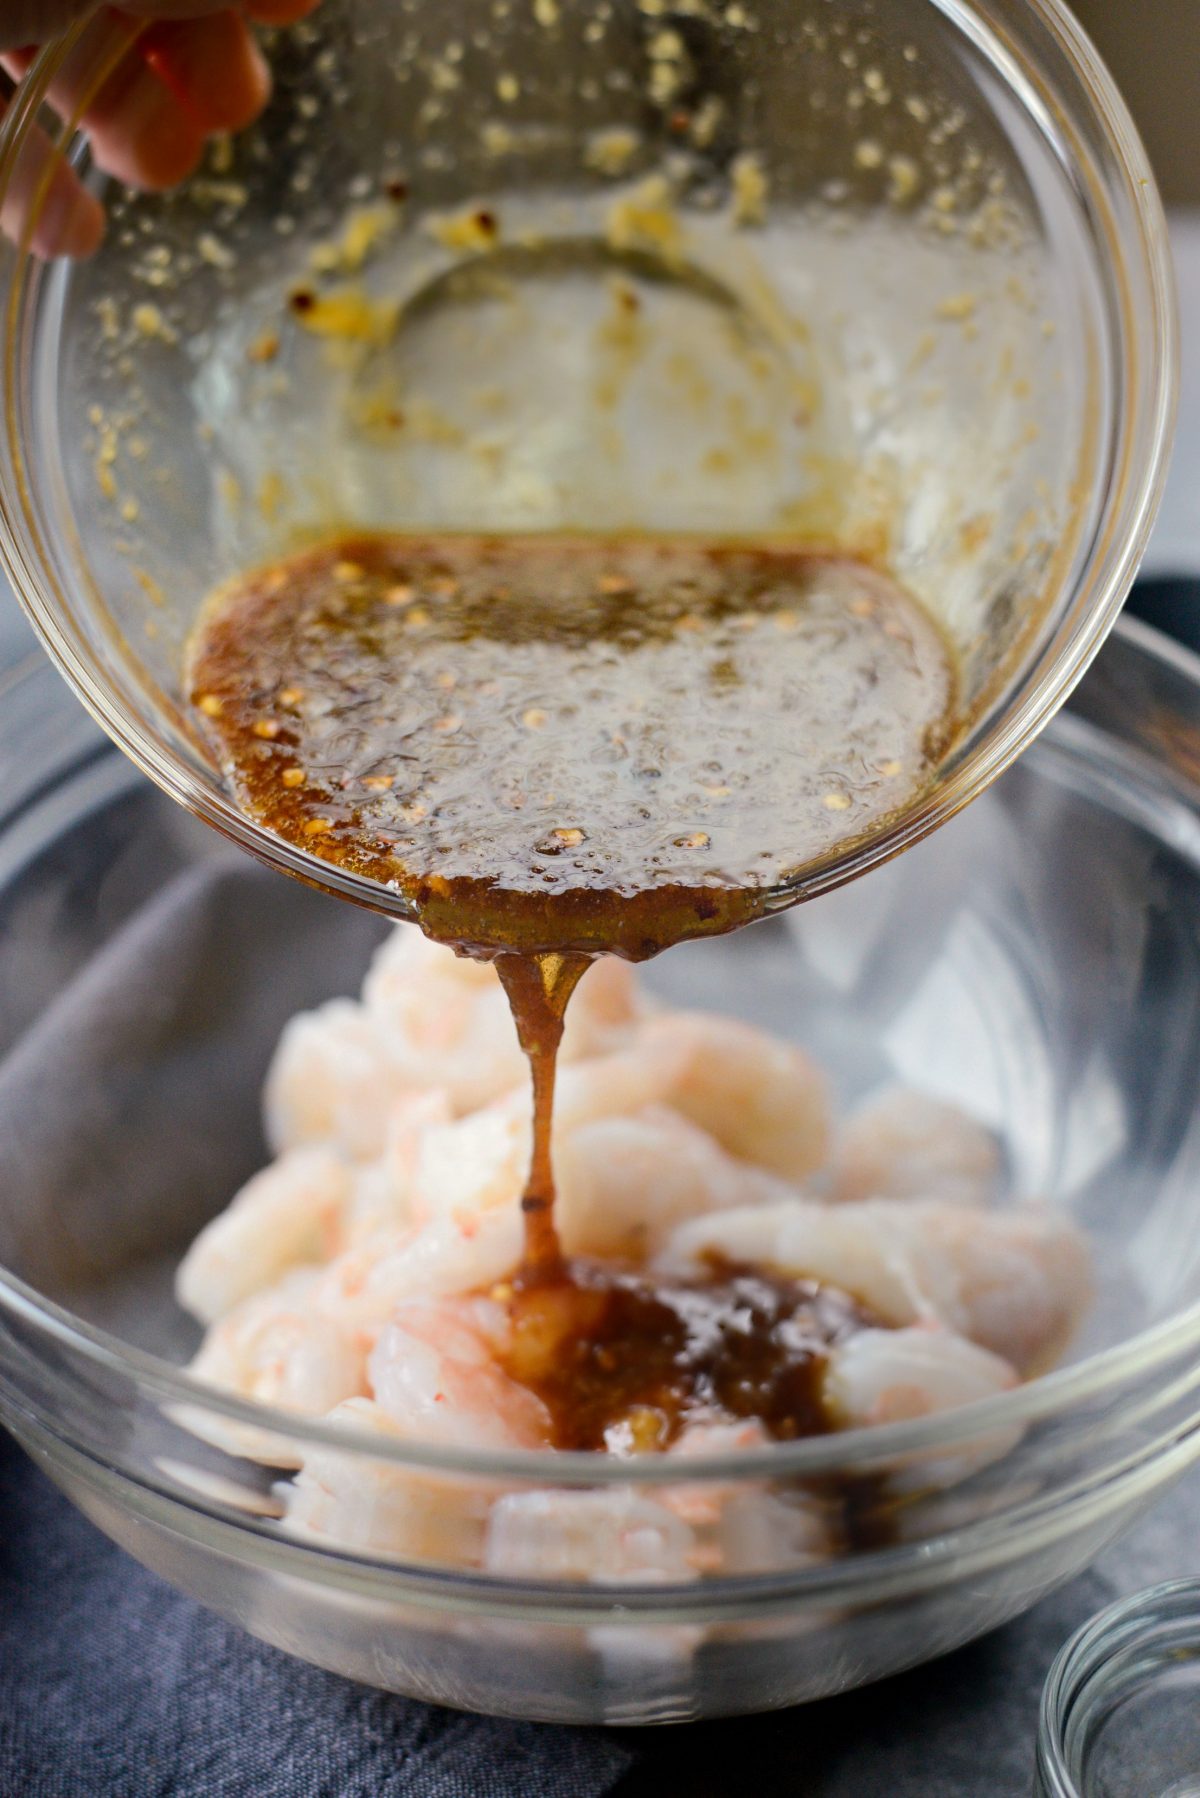 Pour 1/3 of sauce over shrimp